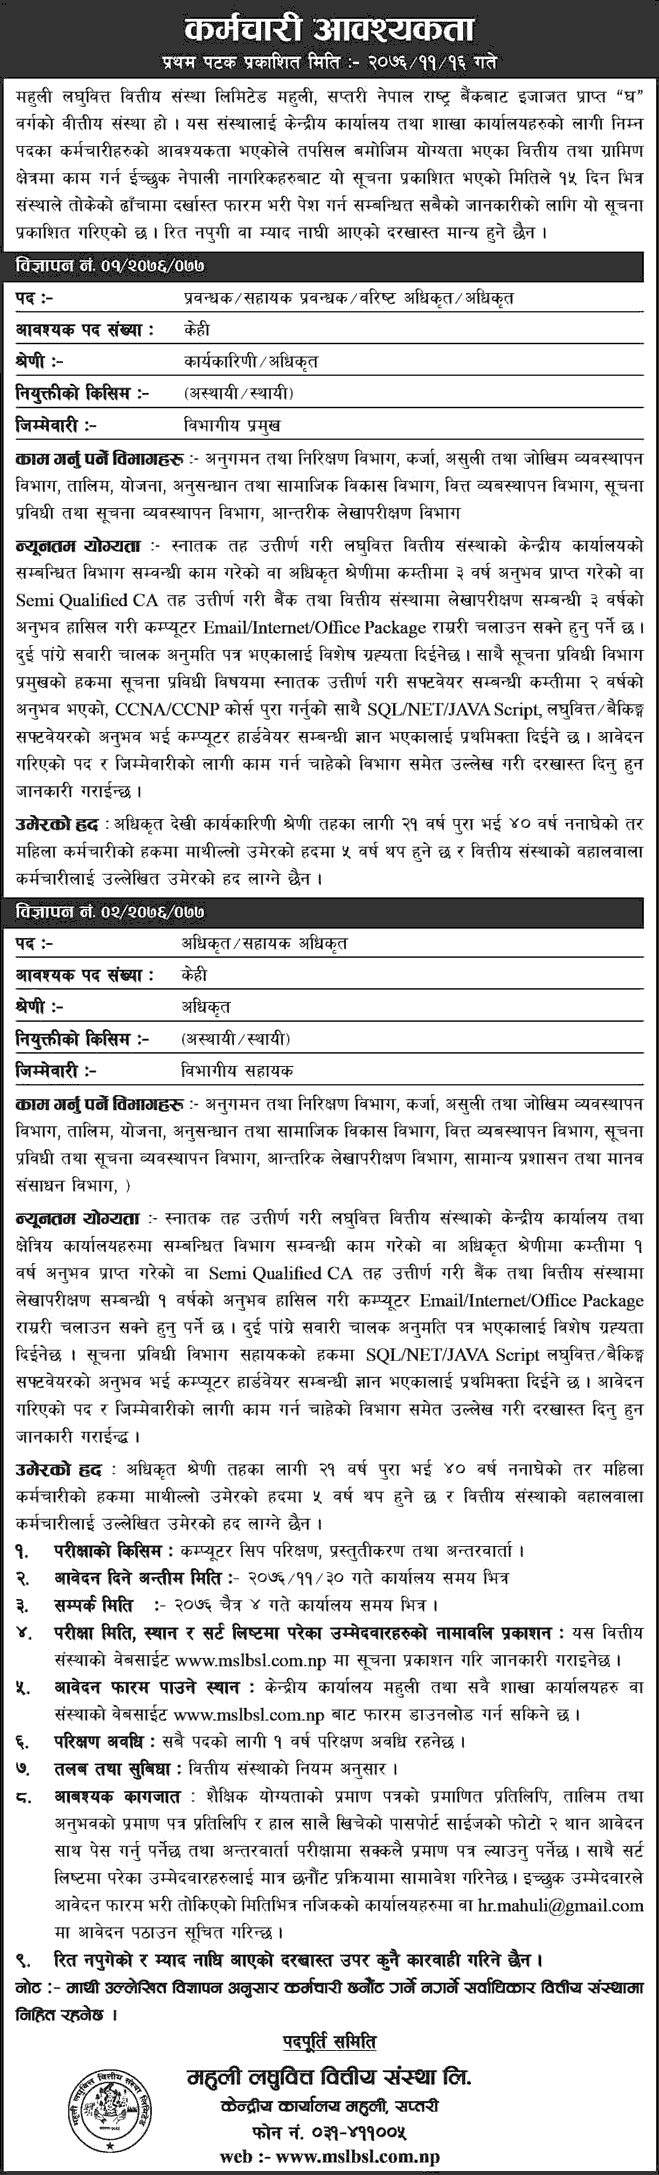 Mahuli Laghubitta Bittiya Sanstha Limited Vacancy Announcement